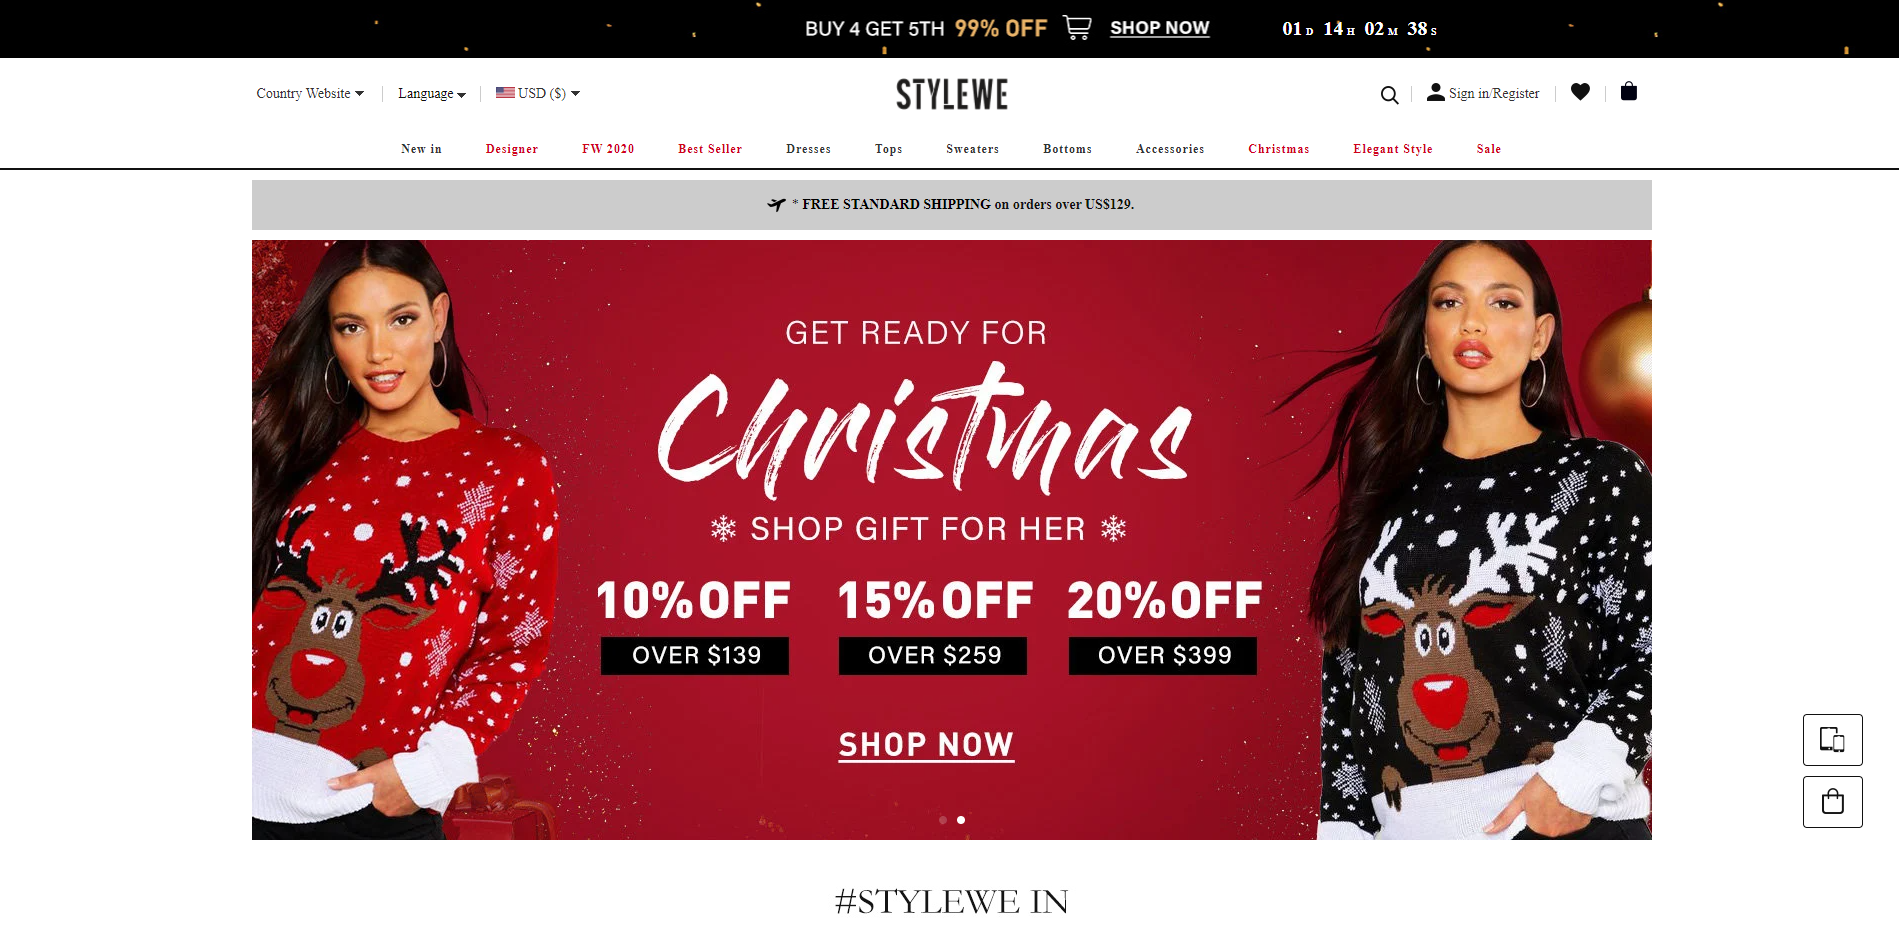 StyleWe.com | Fake or Real? » Fake Website Buster